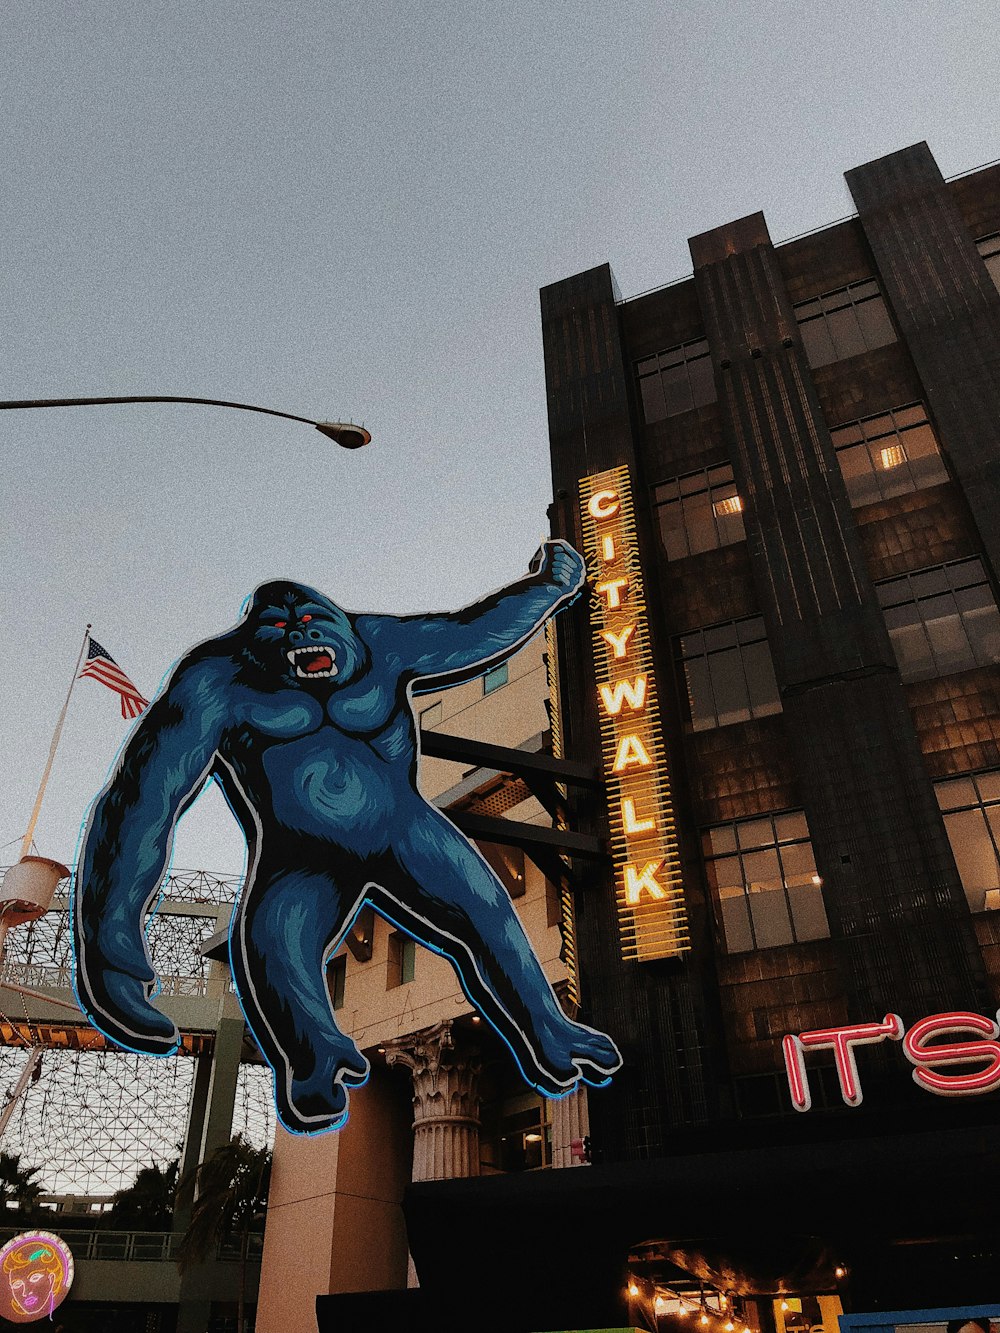 Citywalk building with blue gorilla billboard